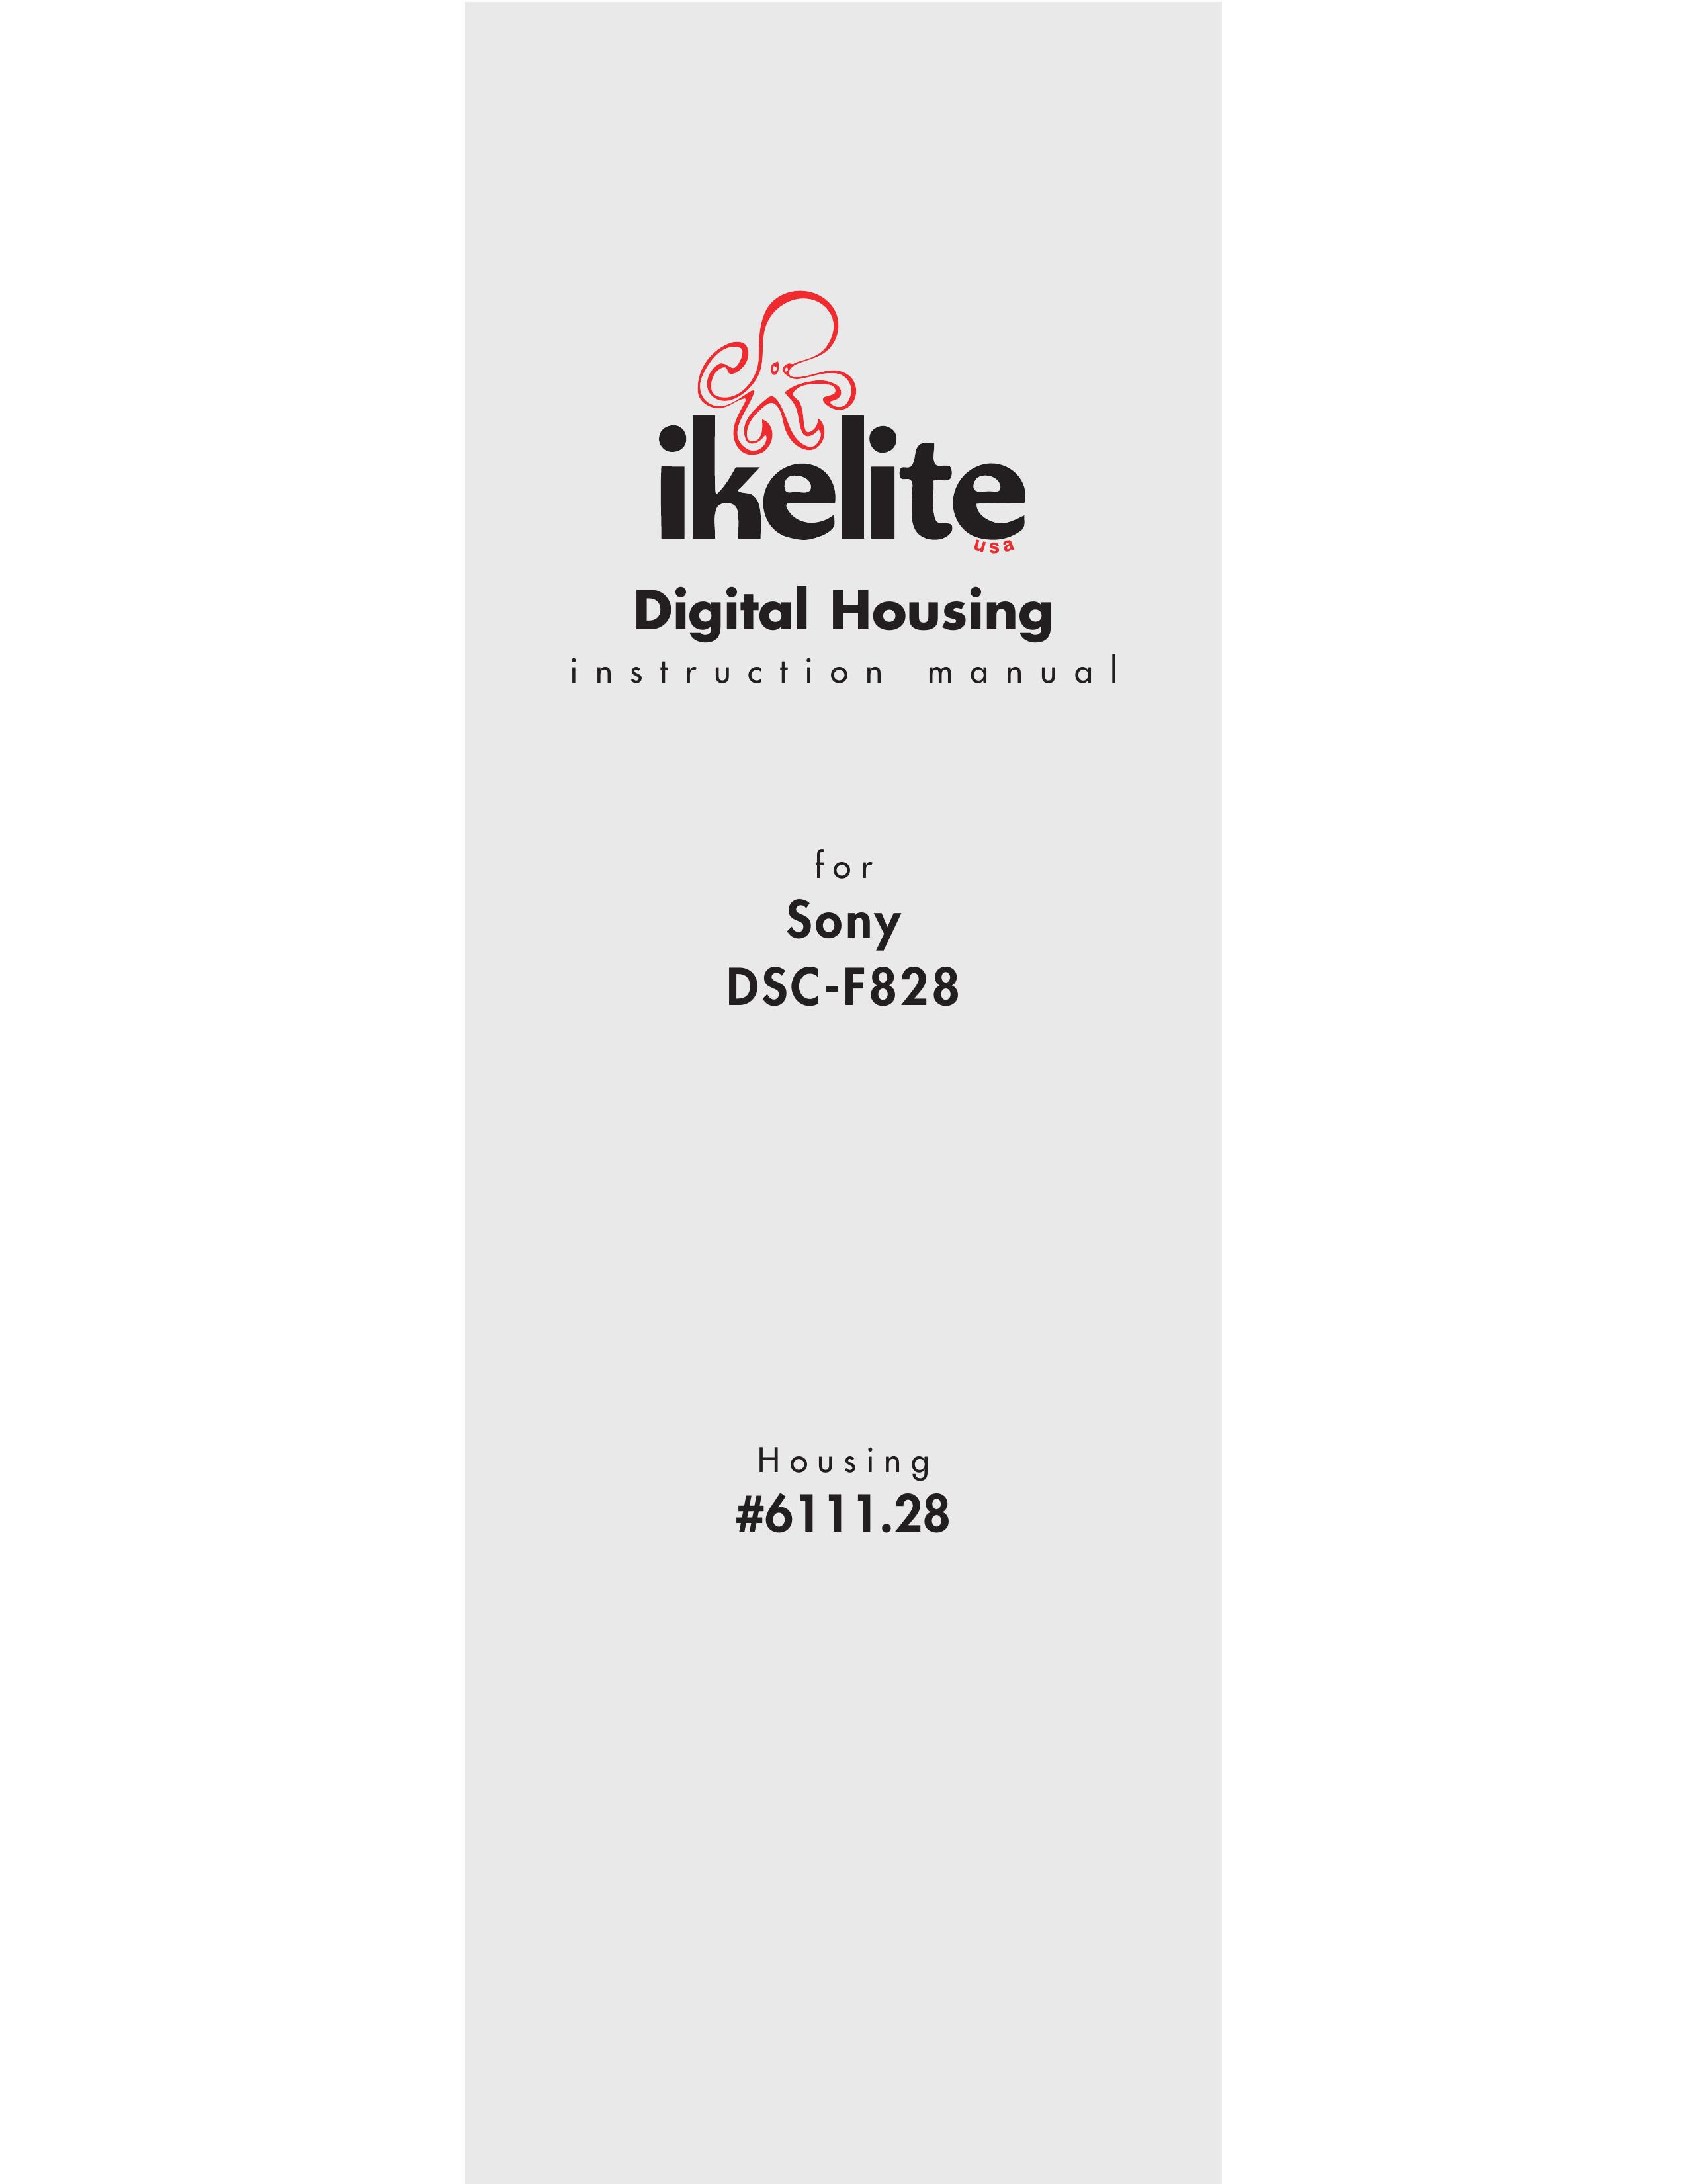 Ikelite DSC-F828 Digital Camera User Manual